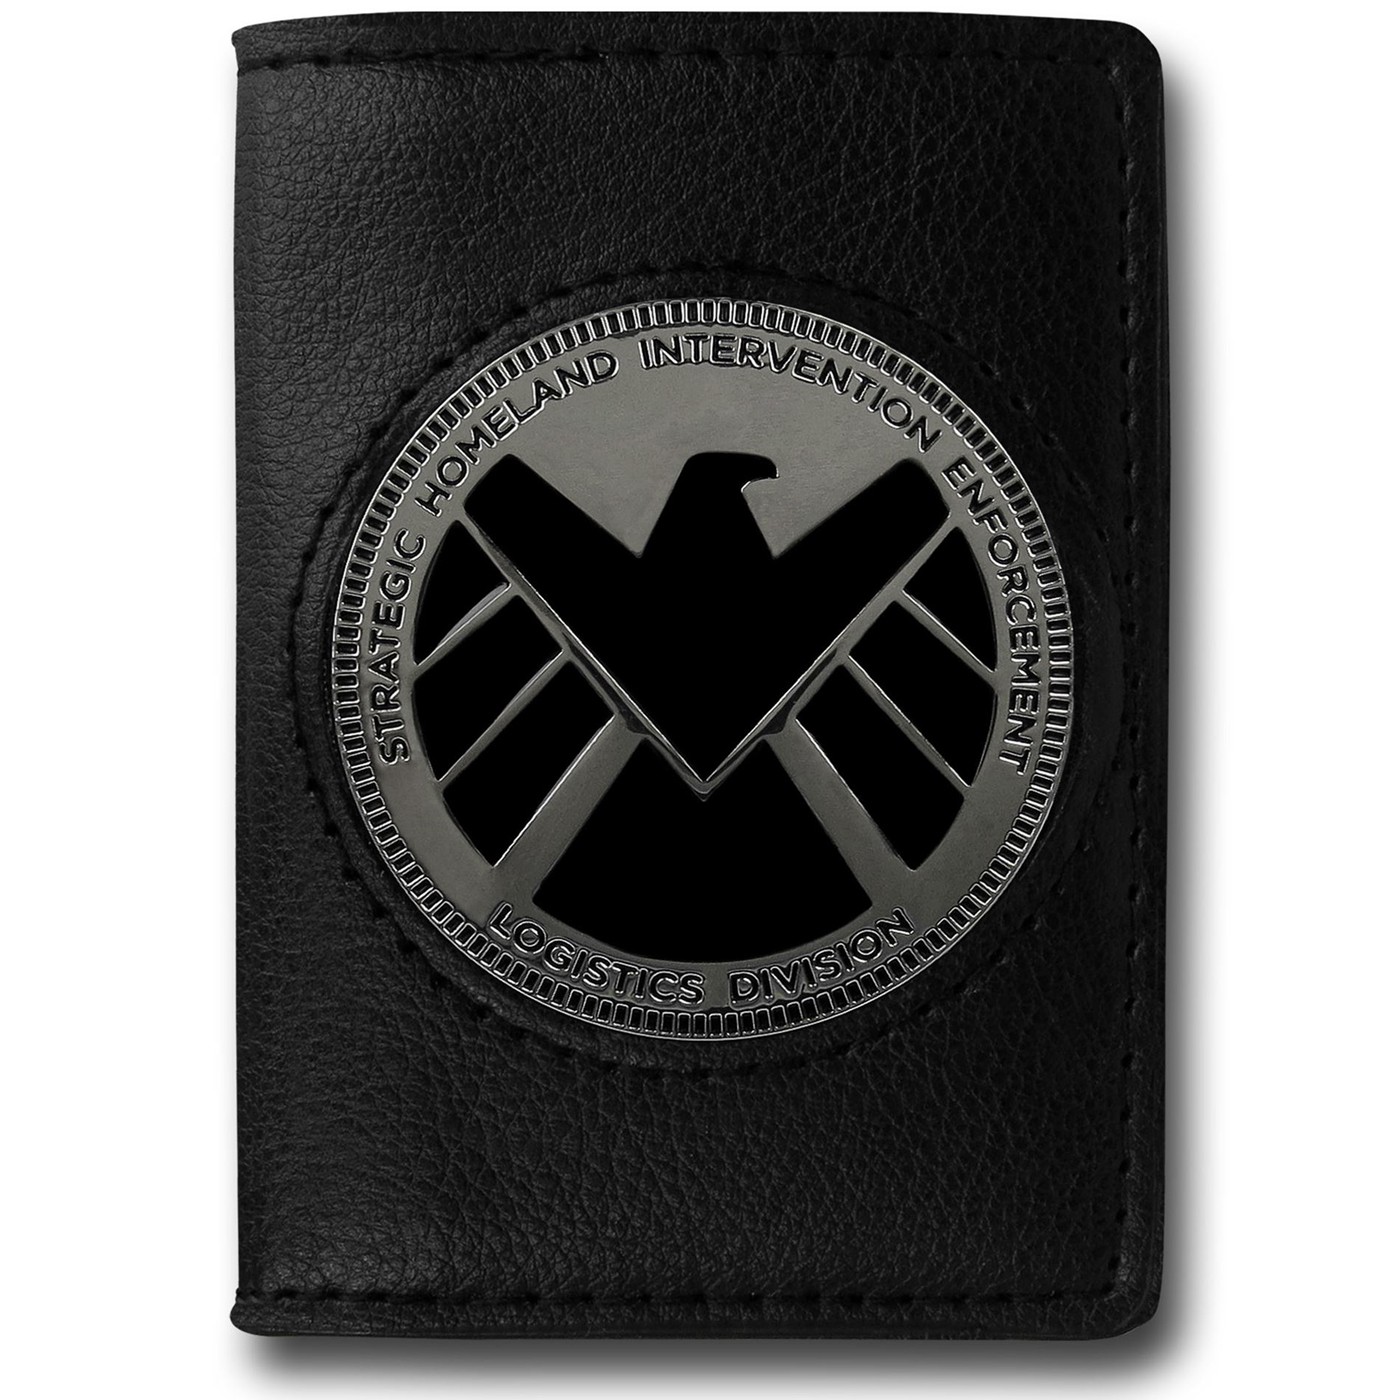 SHIELD Agent Badge Wallet